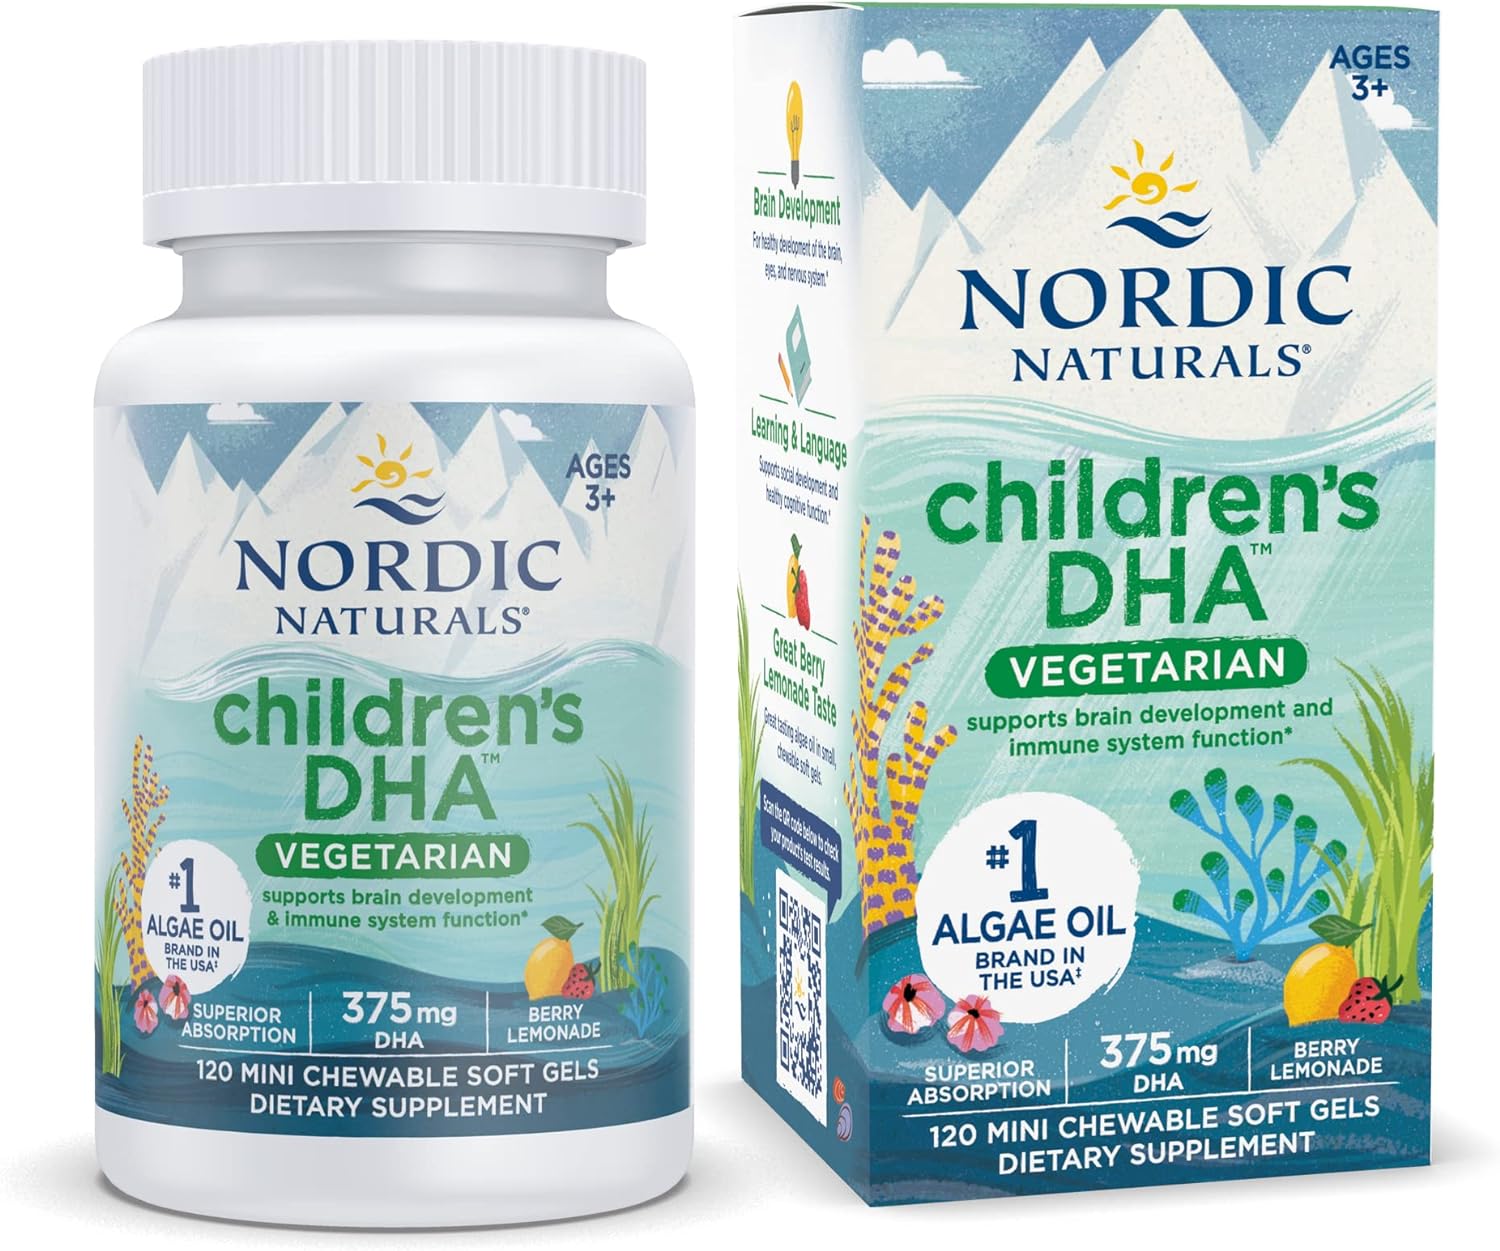 Nordic Naturals Children's DHA Vegetarian - Kids DHA Omega-3 Supplemen